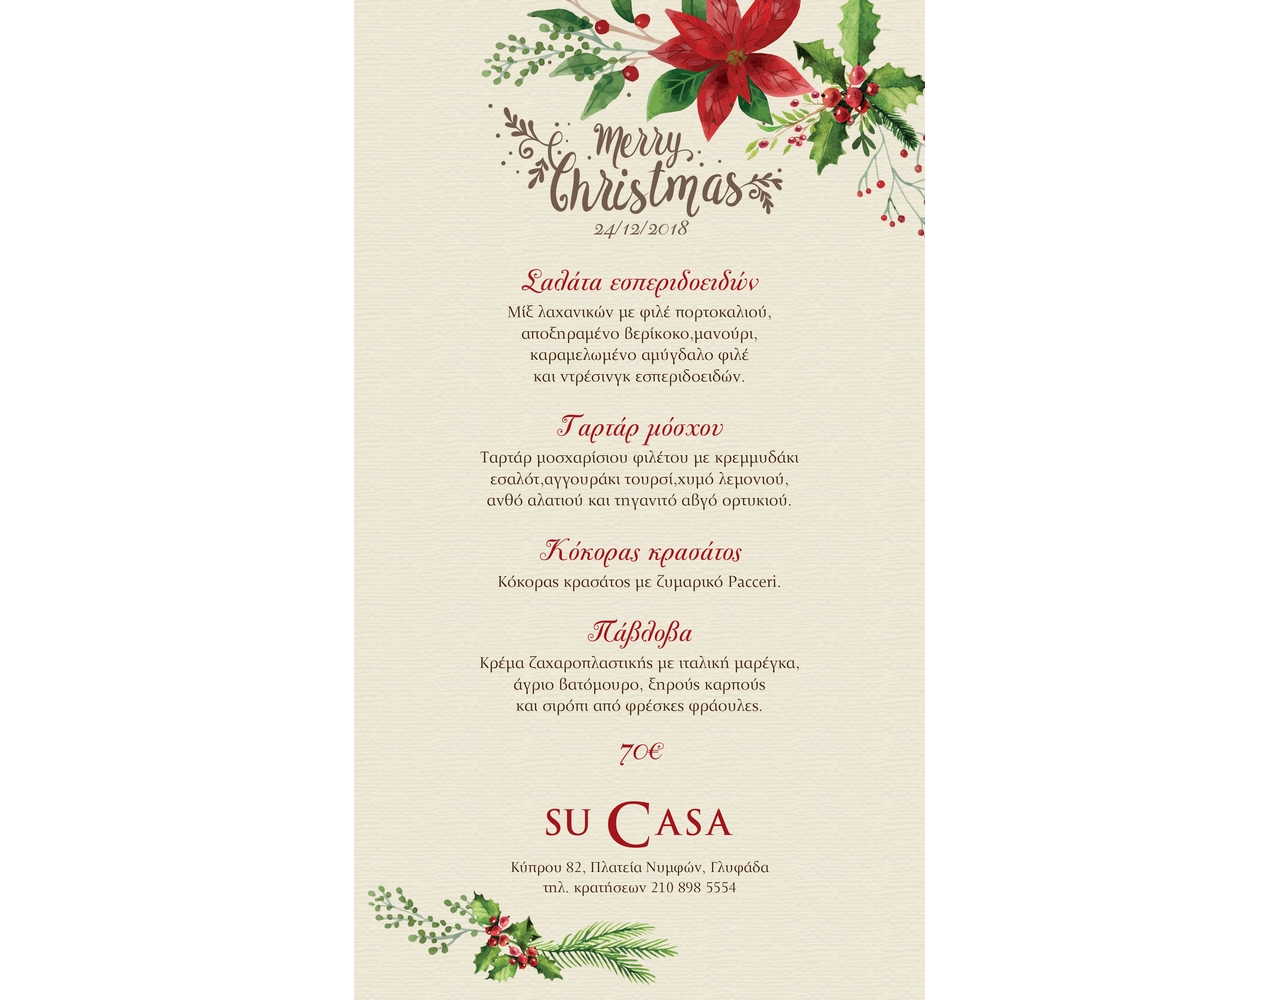 To Xριστουγεννιάτικο μενού του SU CASA